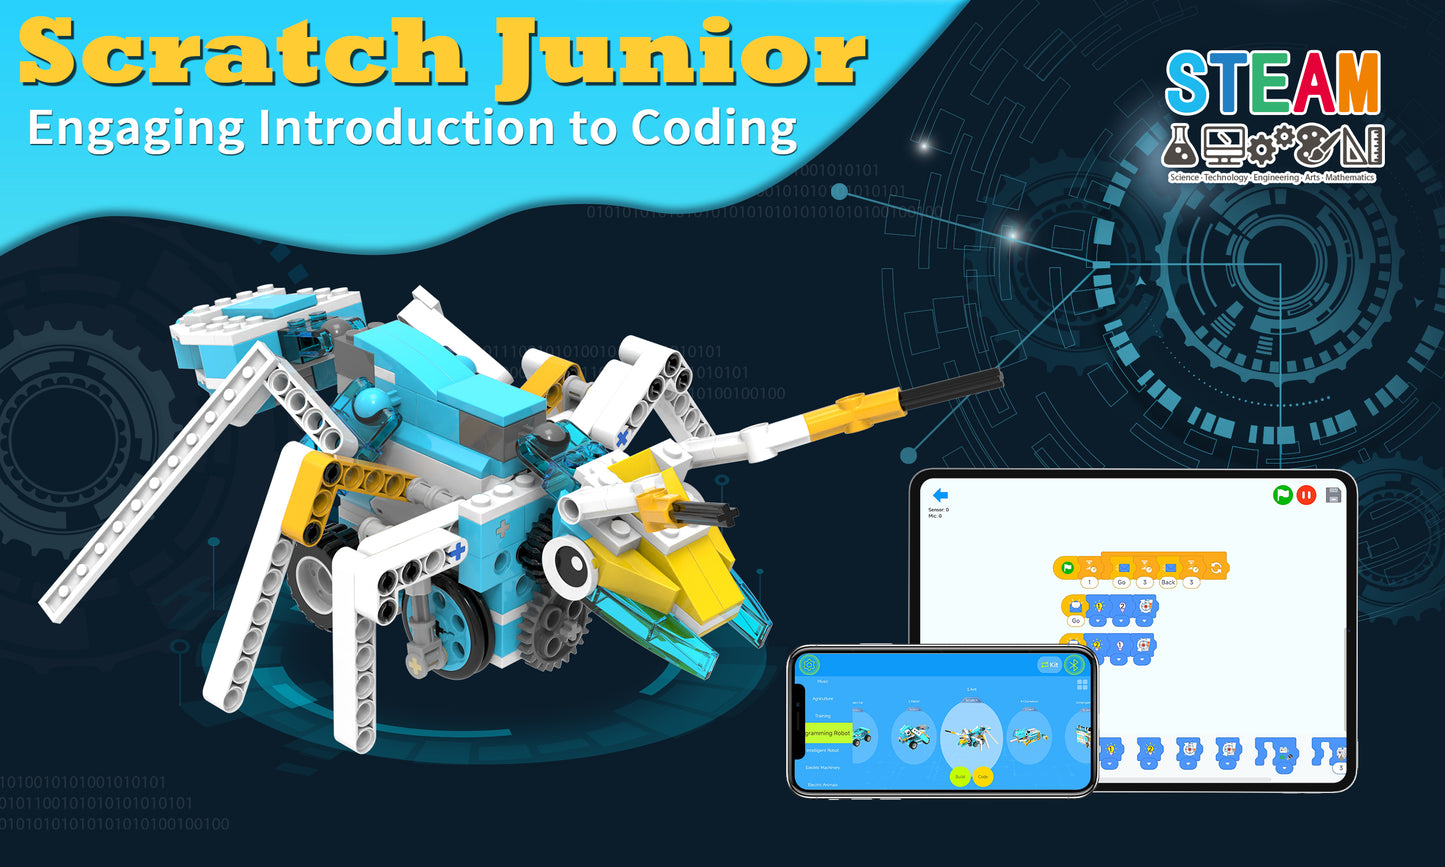 makerzoid 200-in-1 Scratch Jr Coding Robot Kit - STEM Smart Robot Premium Educational Toy - Junior Programming Learning Kit - DIY Robotics Kit for Kids